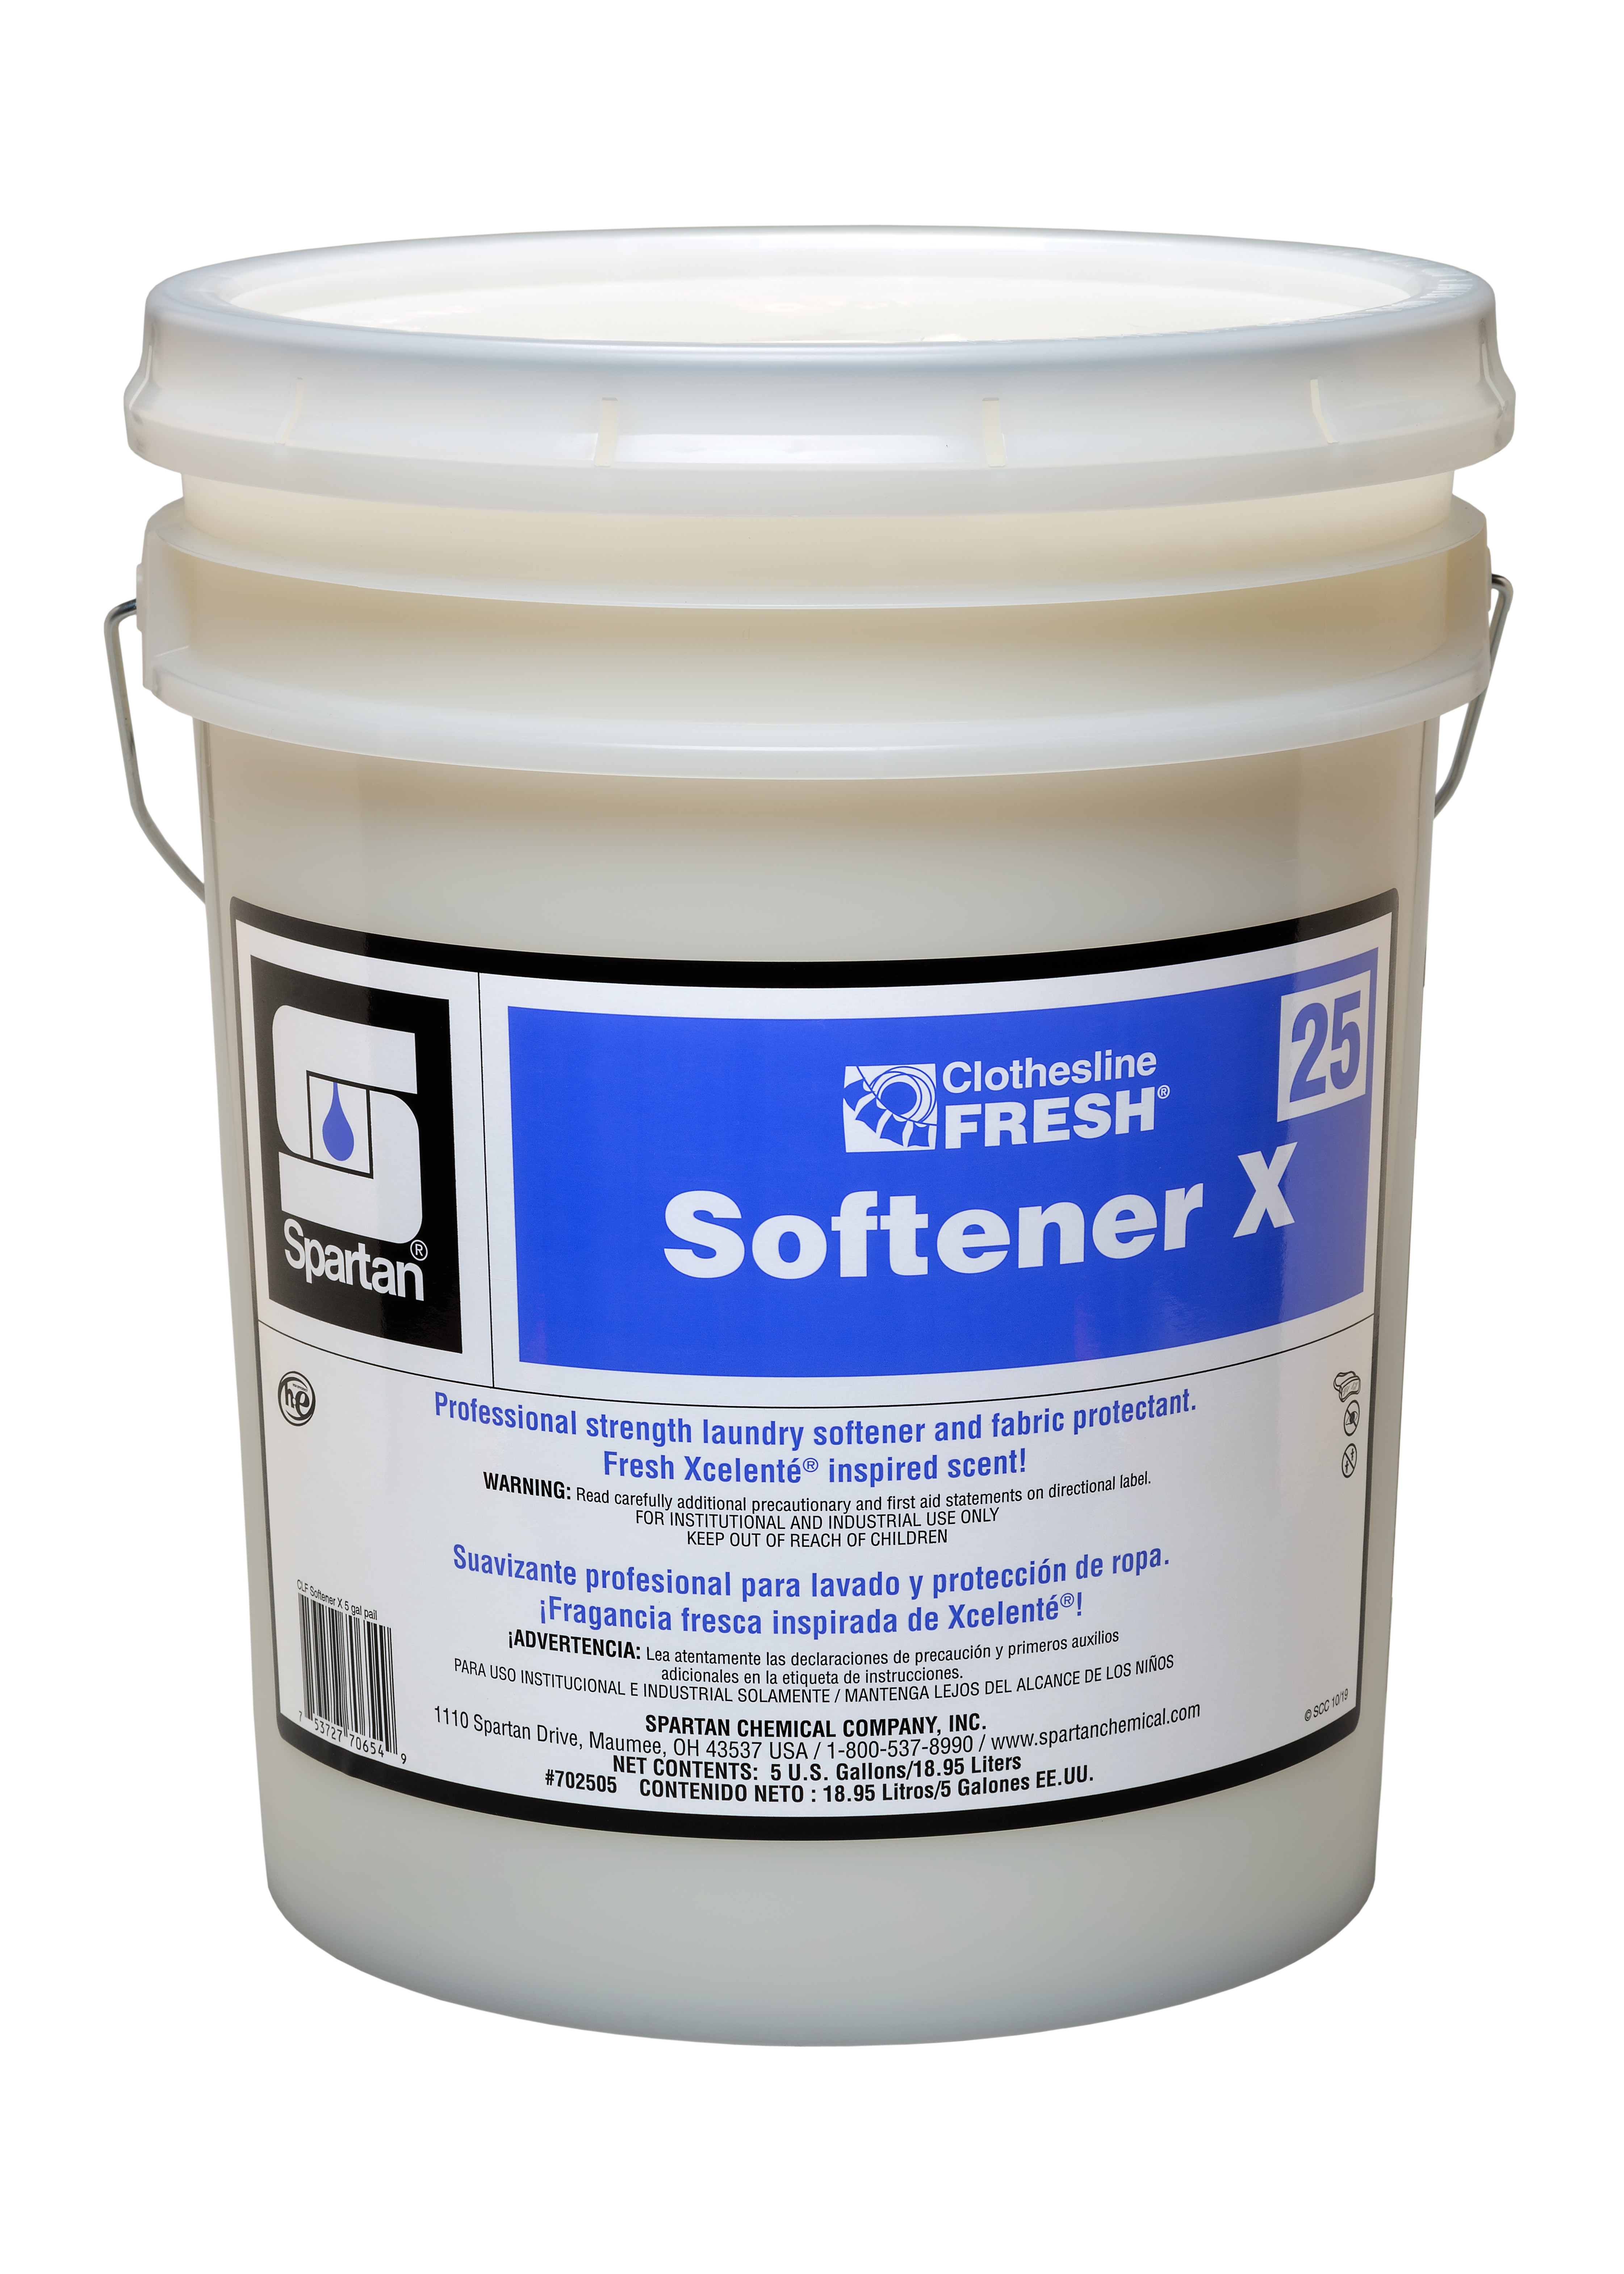 Spartan Chemical Company Clothesline Fresh Softener X 25, 5 GAL PAIL